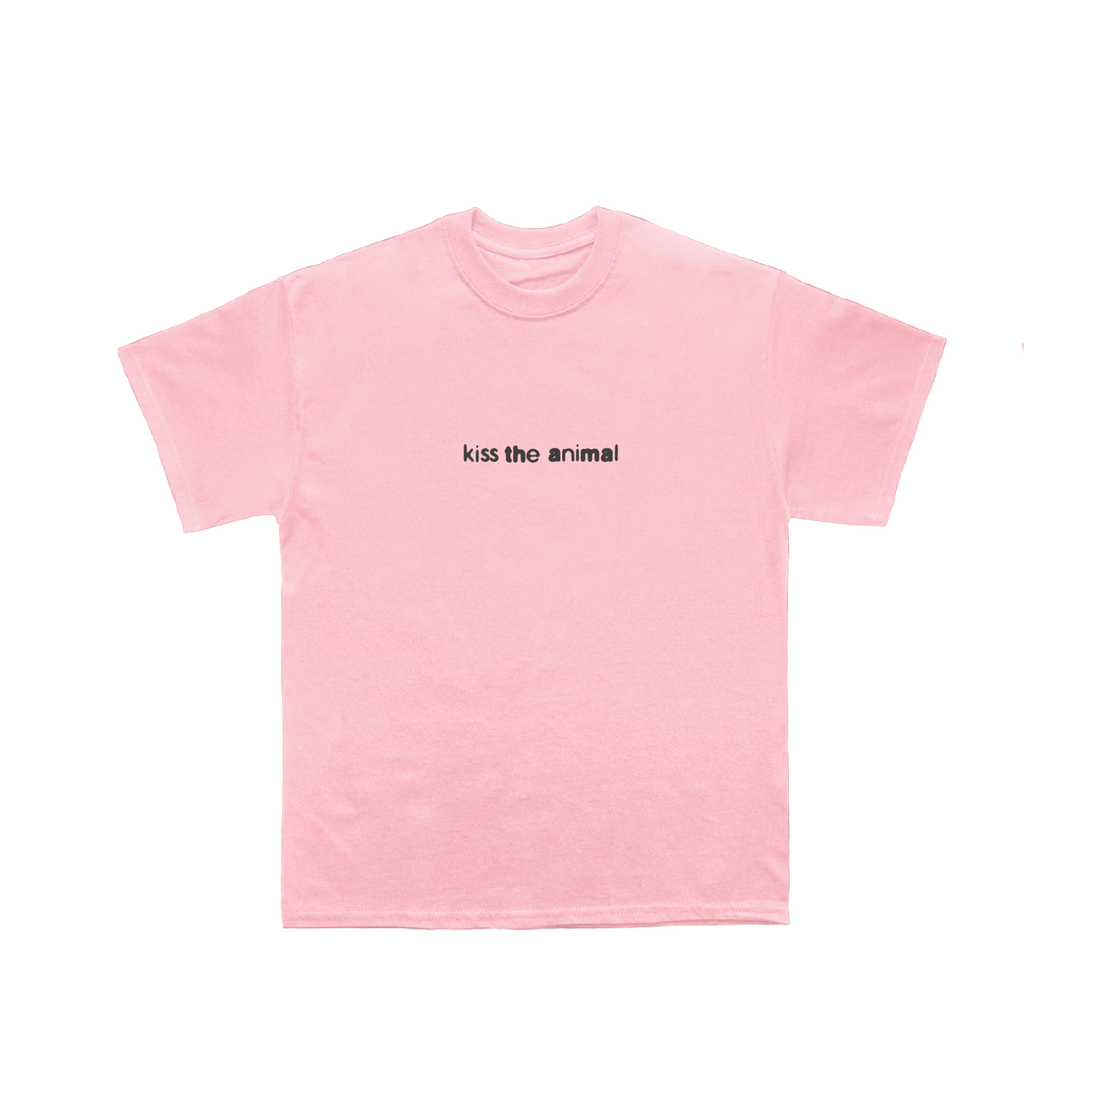 Underworld - Denver Luna T-Shirt Pink